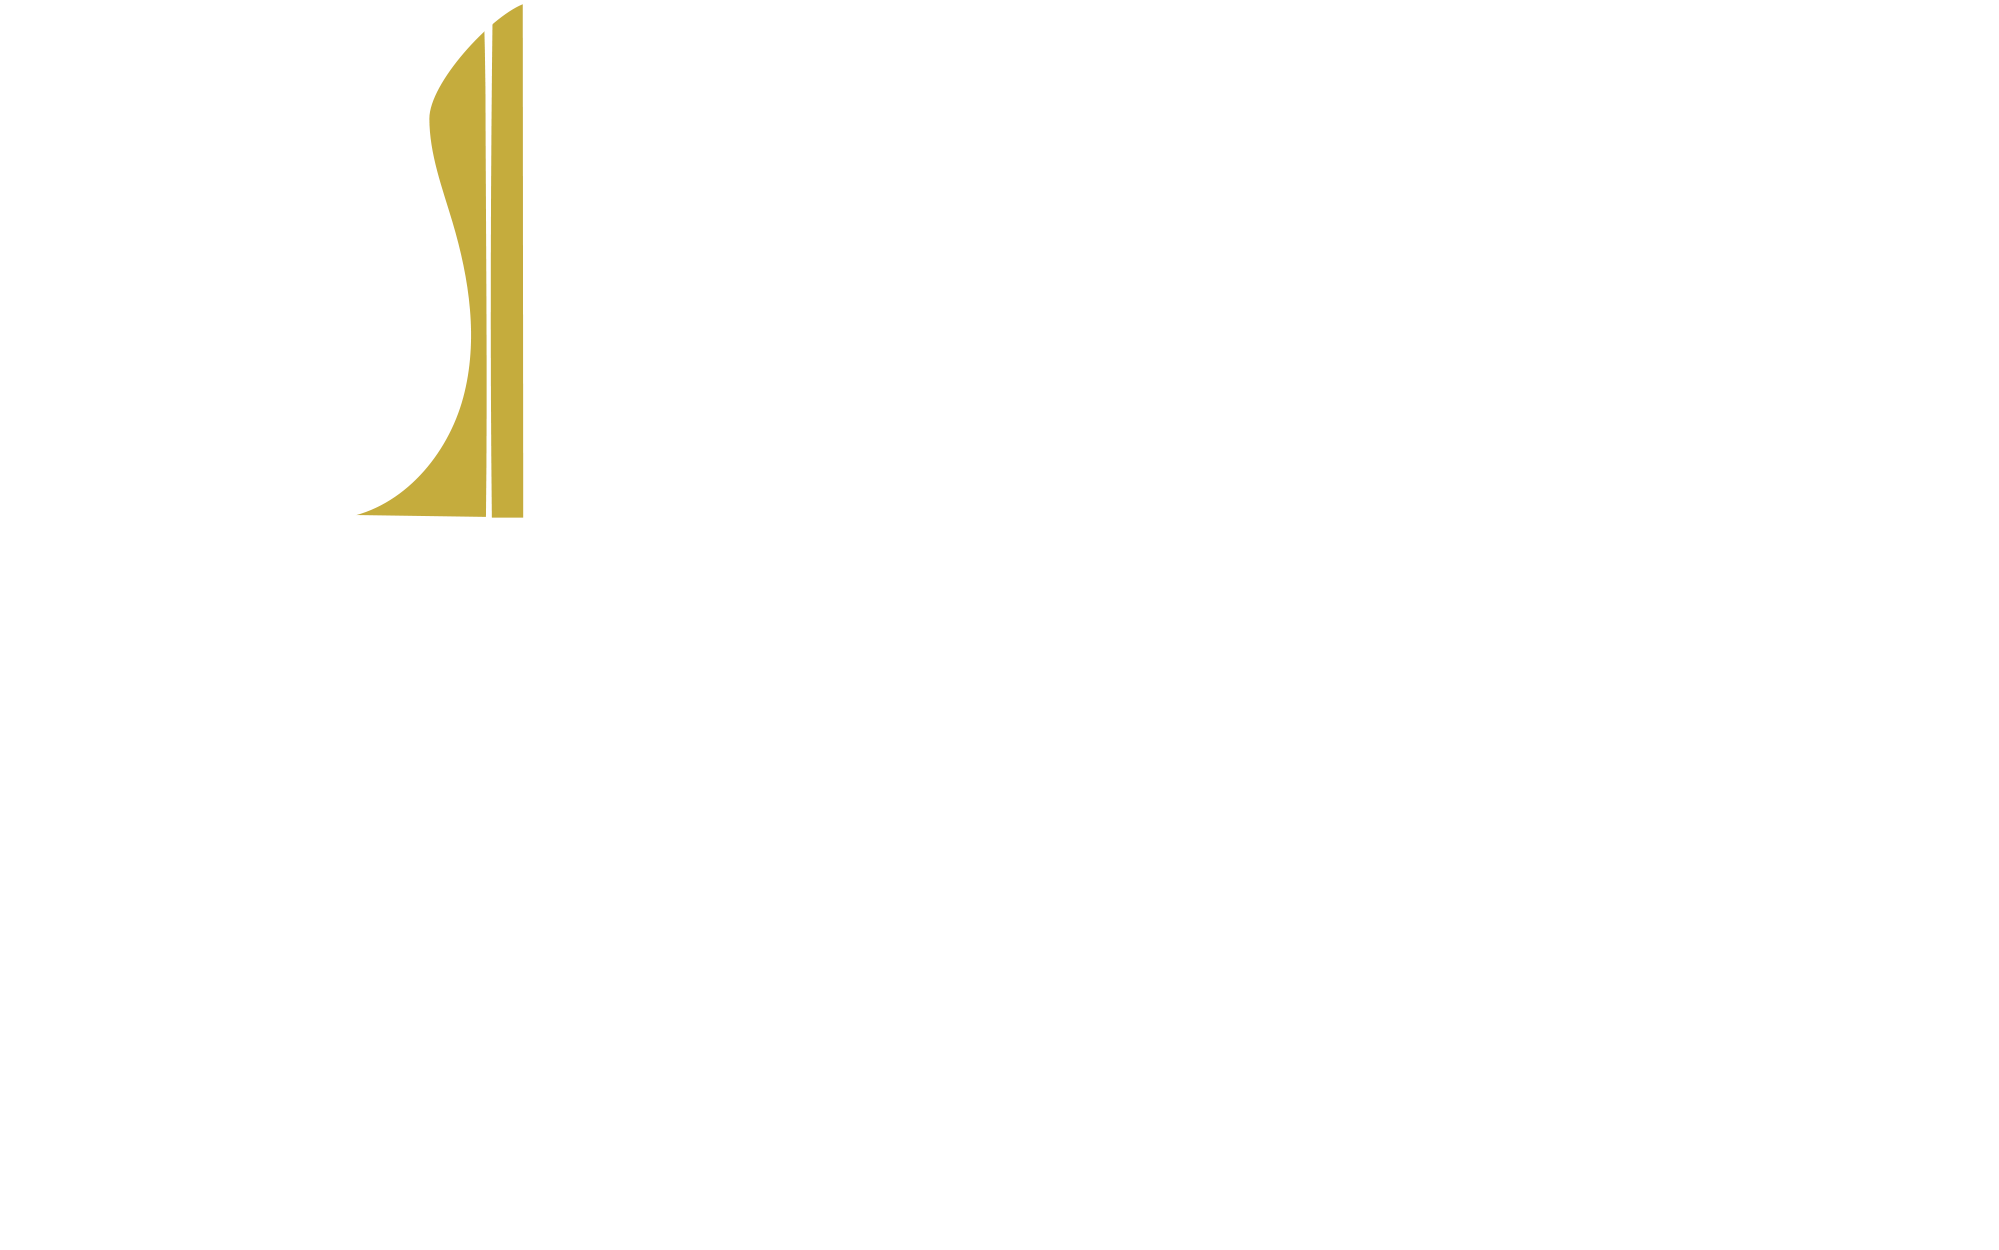 Chefs of Mykonos